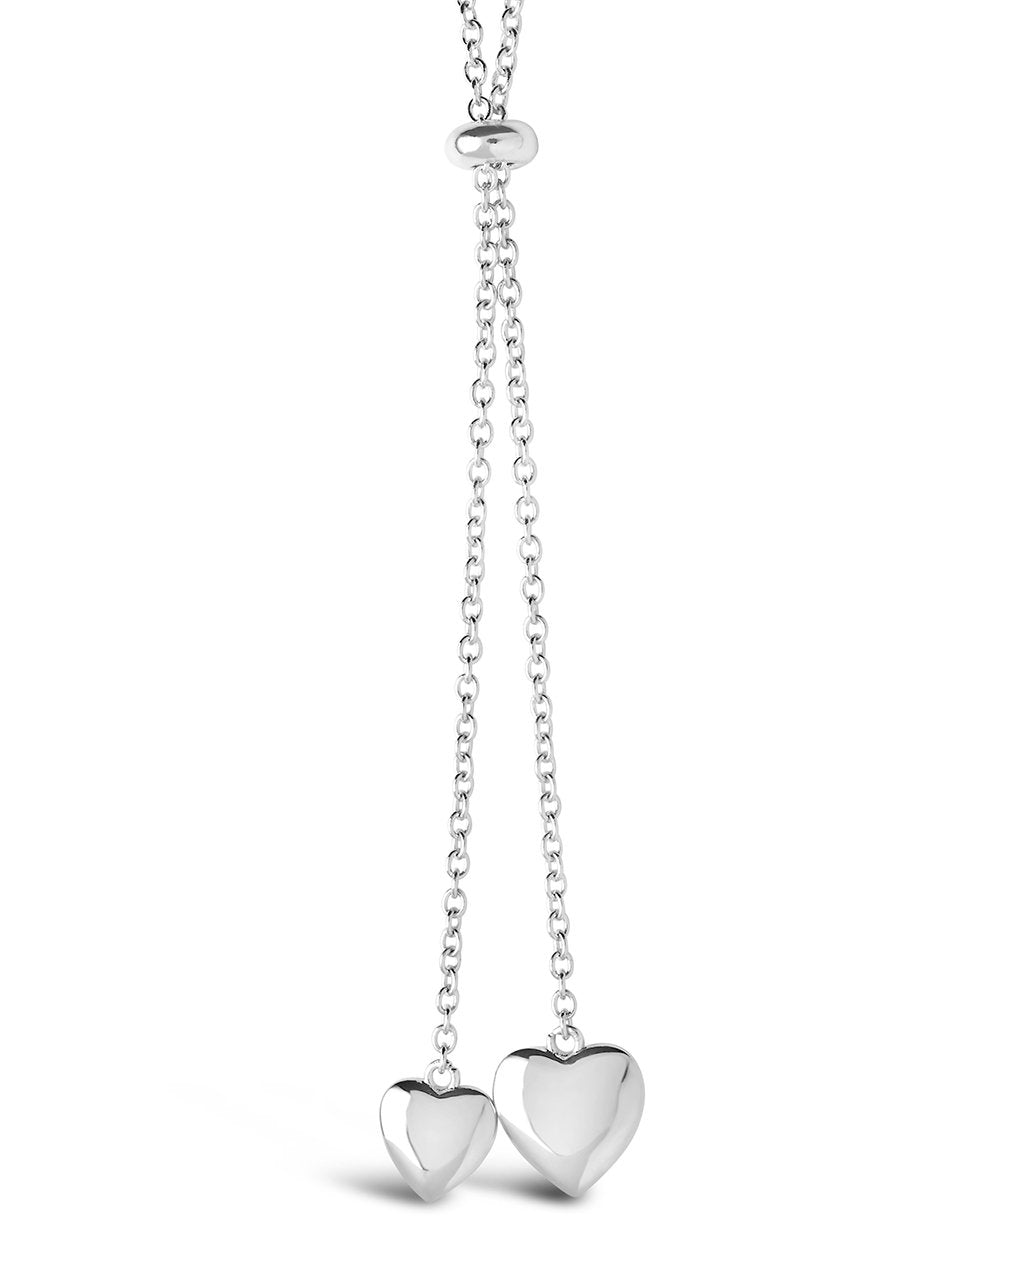 Dangling Heart Bolo Slider Necklace - Sterling Forever